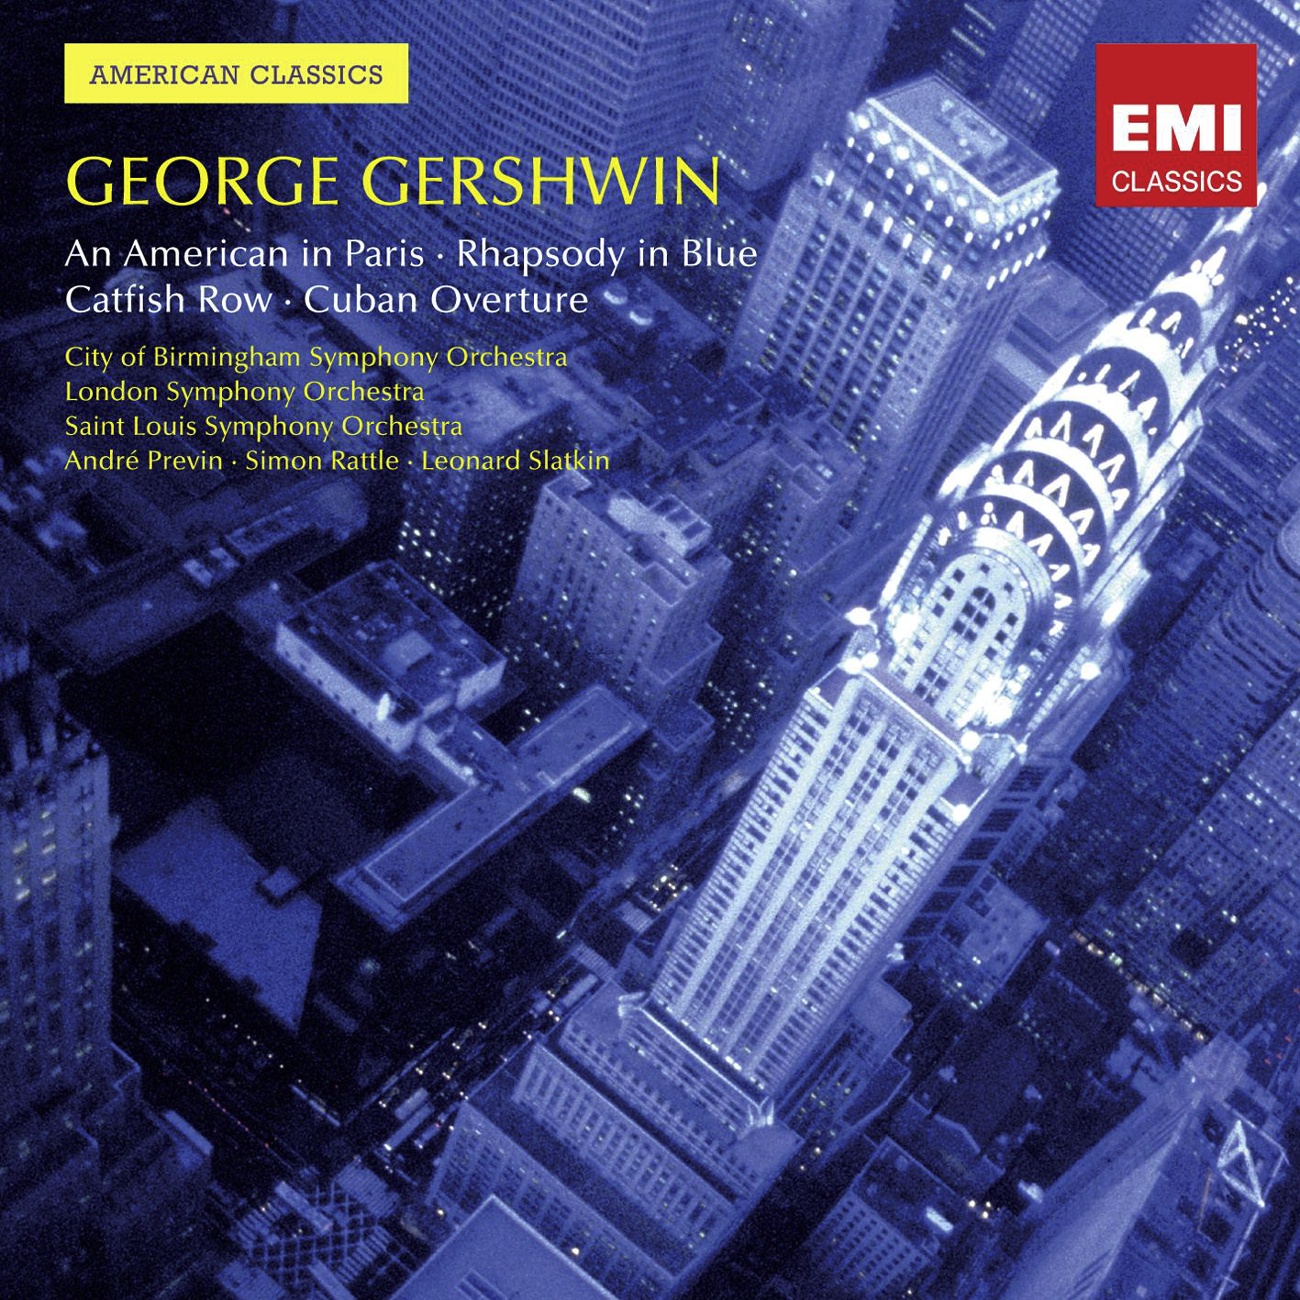 American Classics: George Gershwin